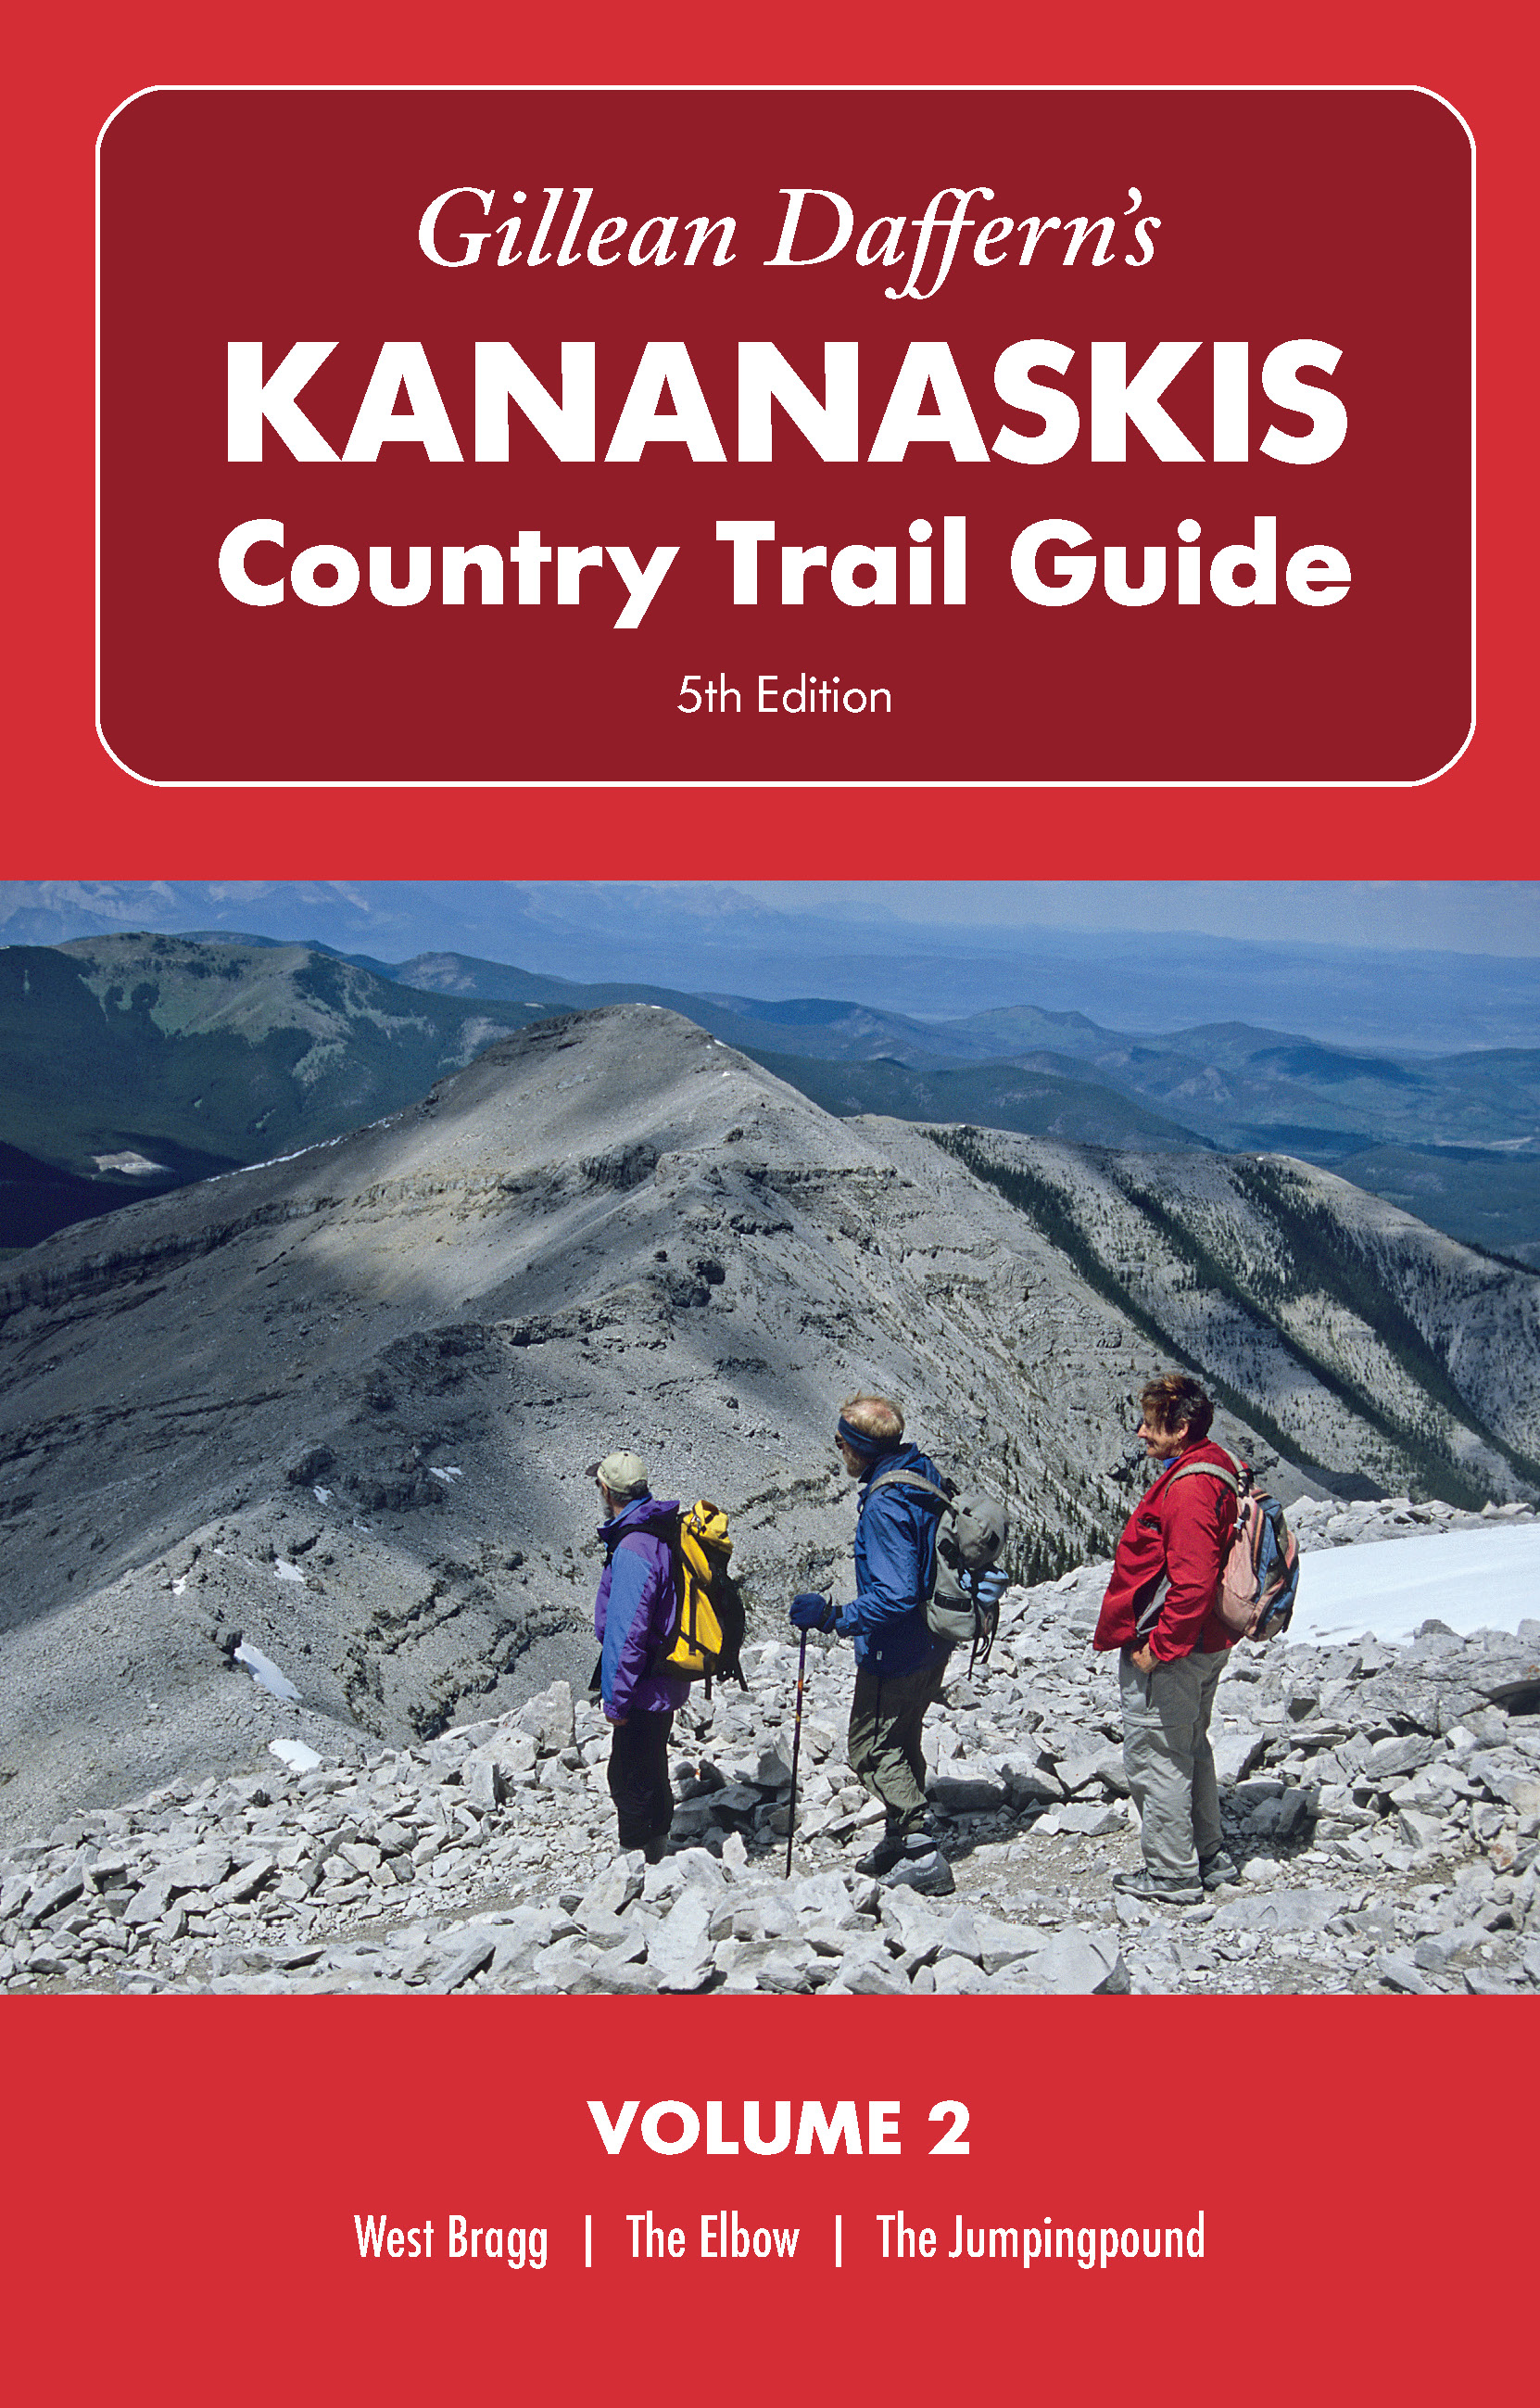 Gillean DaffernaEUs Kananaskis Country Trail Gui : Volume 2